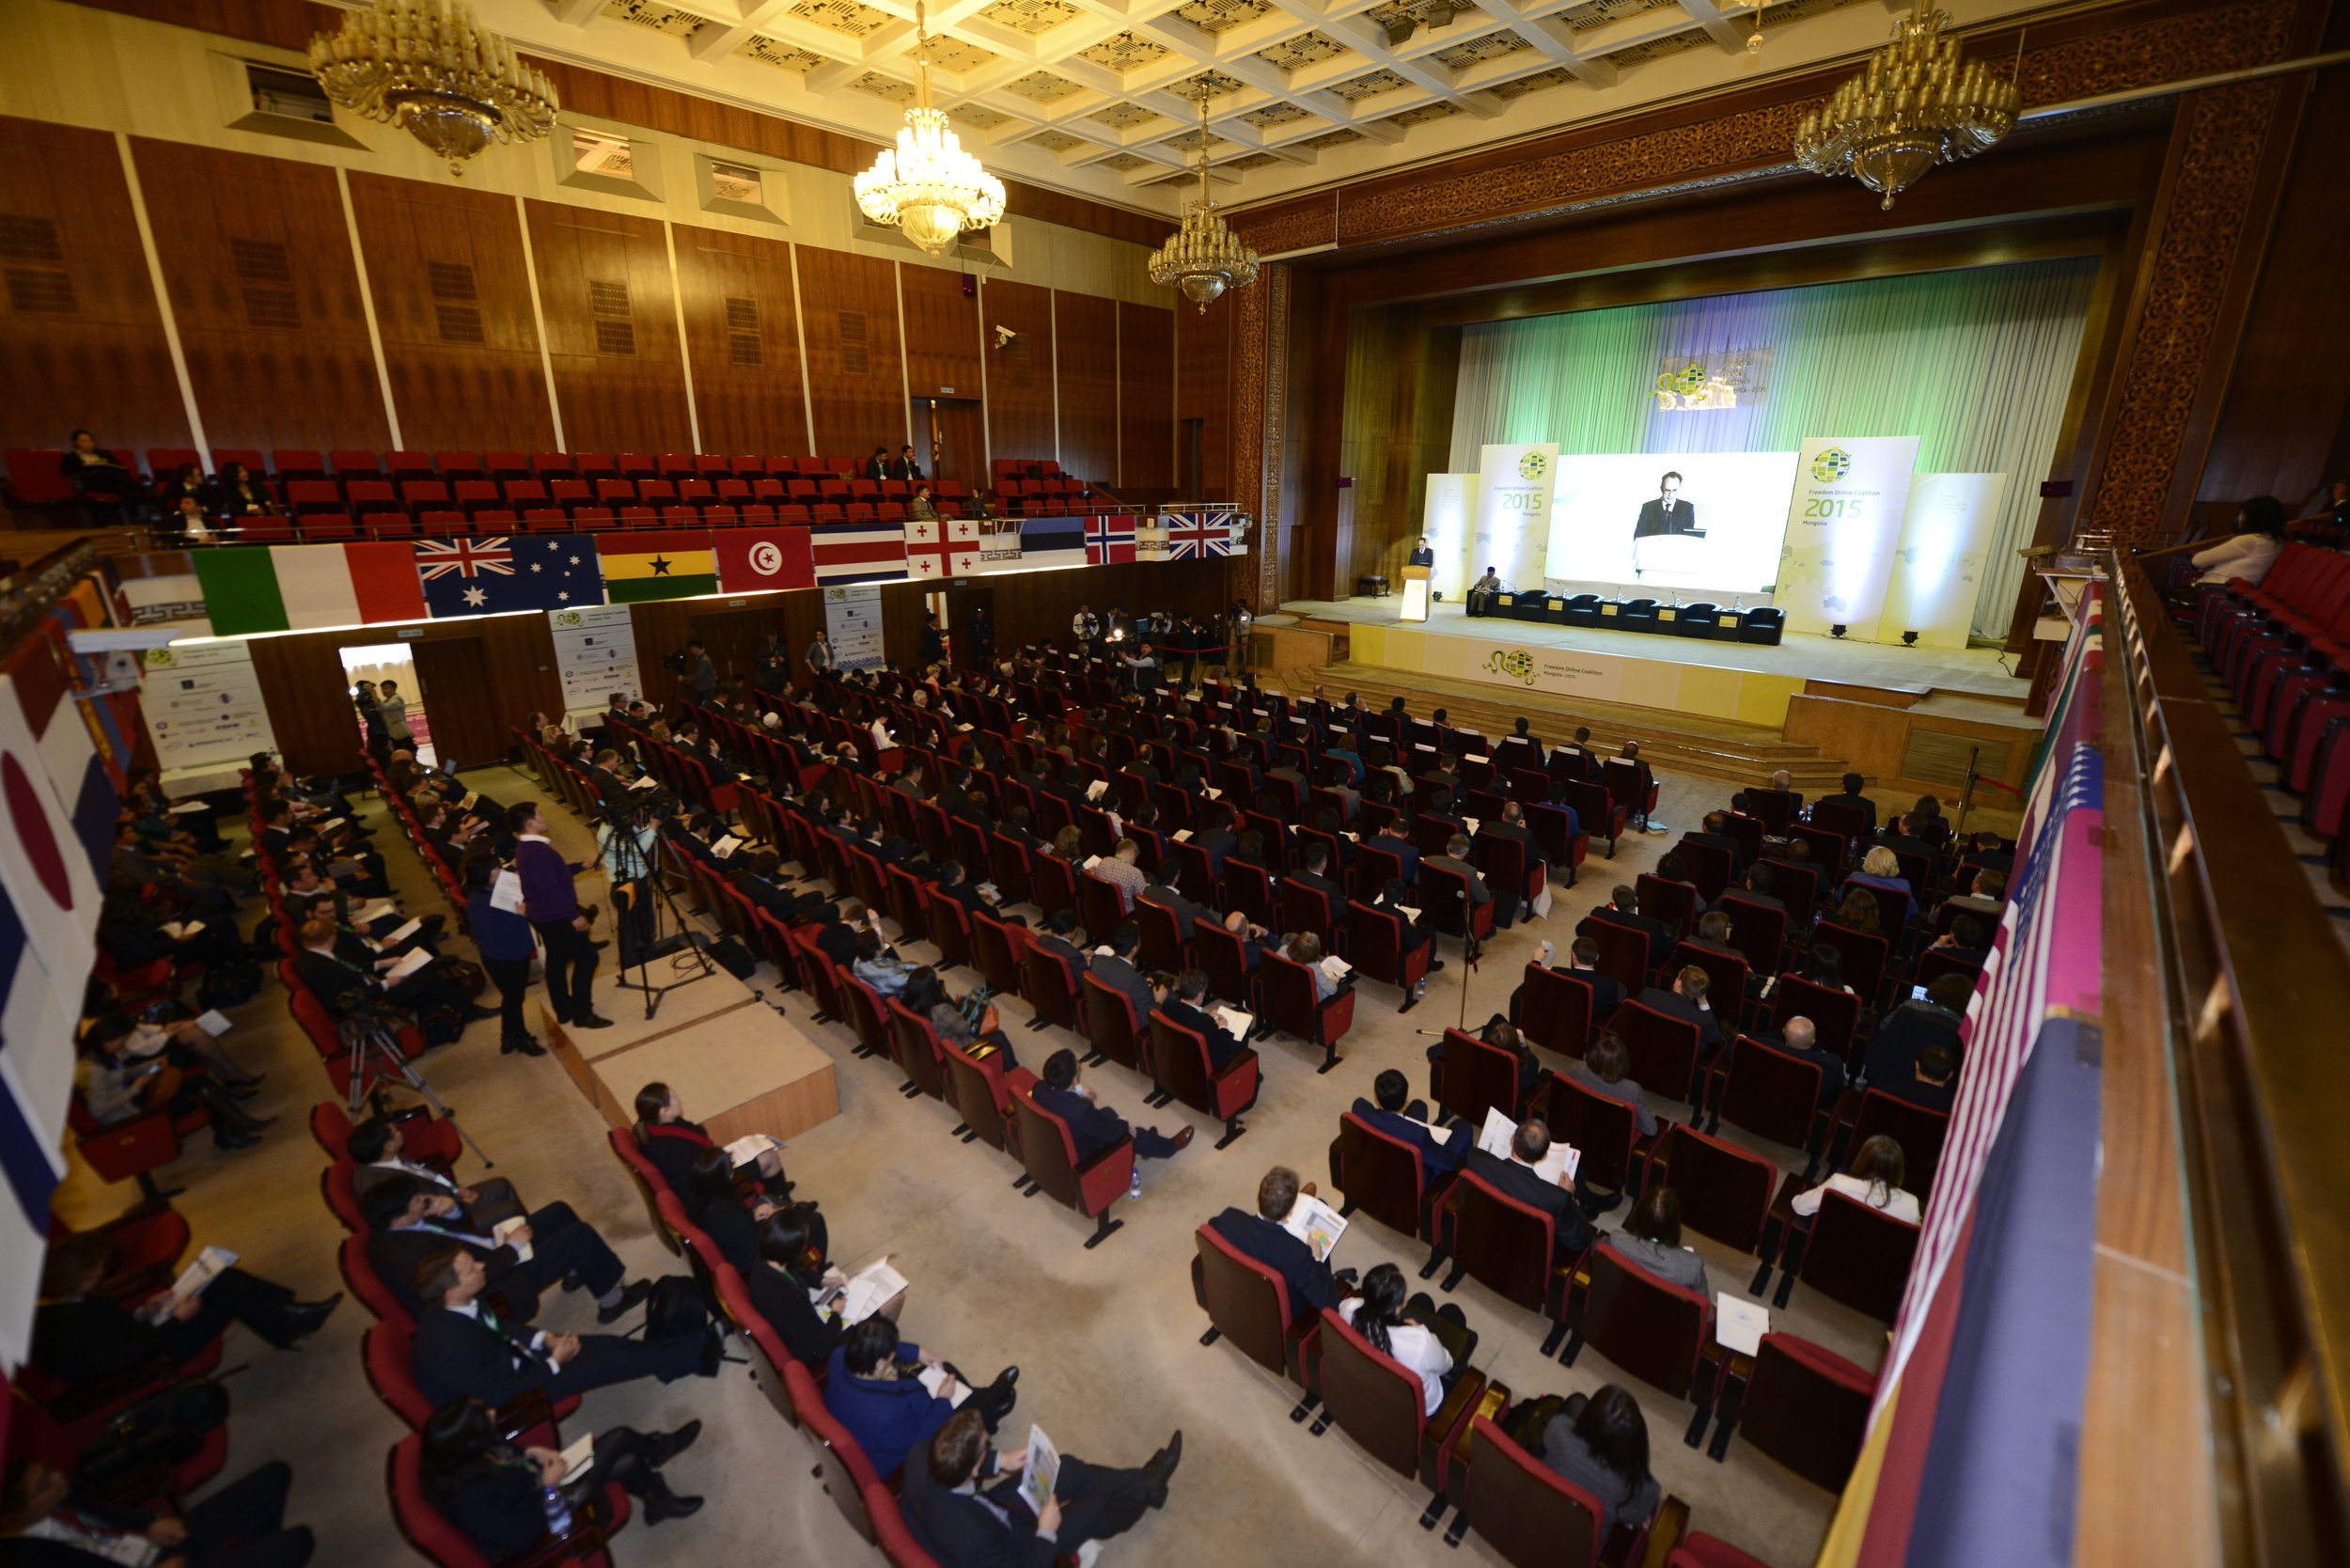 Freedom Online Coalition 2015 Conference in Ulaanbattar